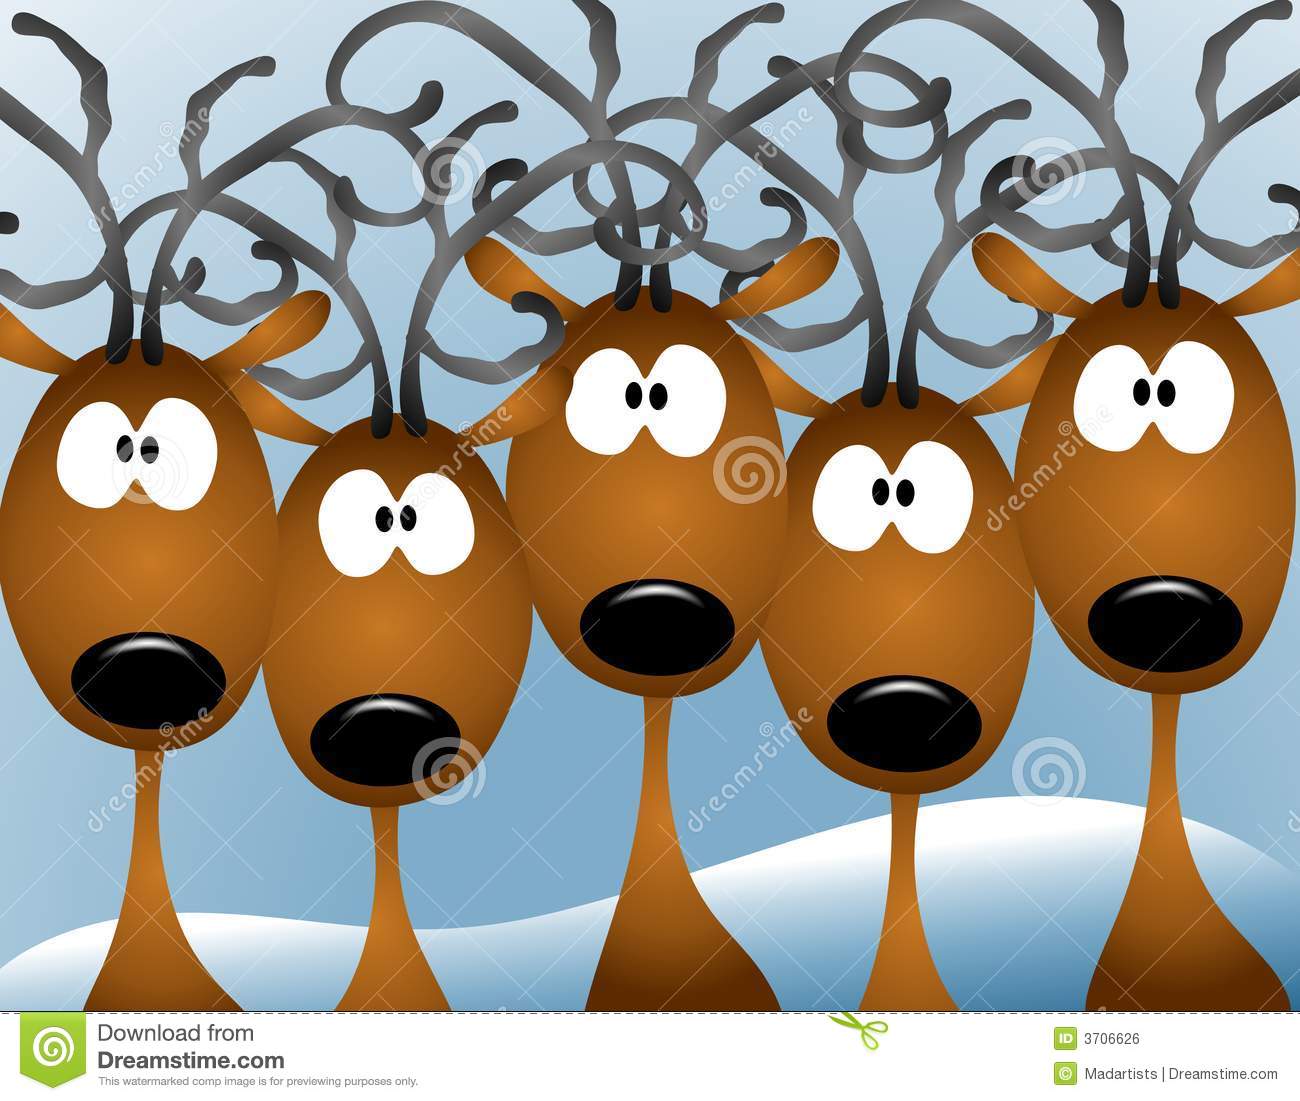 Cartoon Reindeer Christmas Card Royalty Free Stock Image   Image